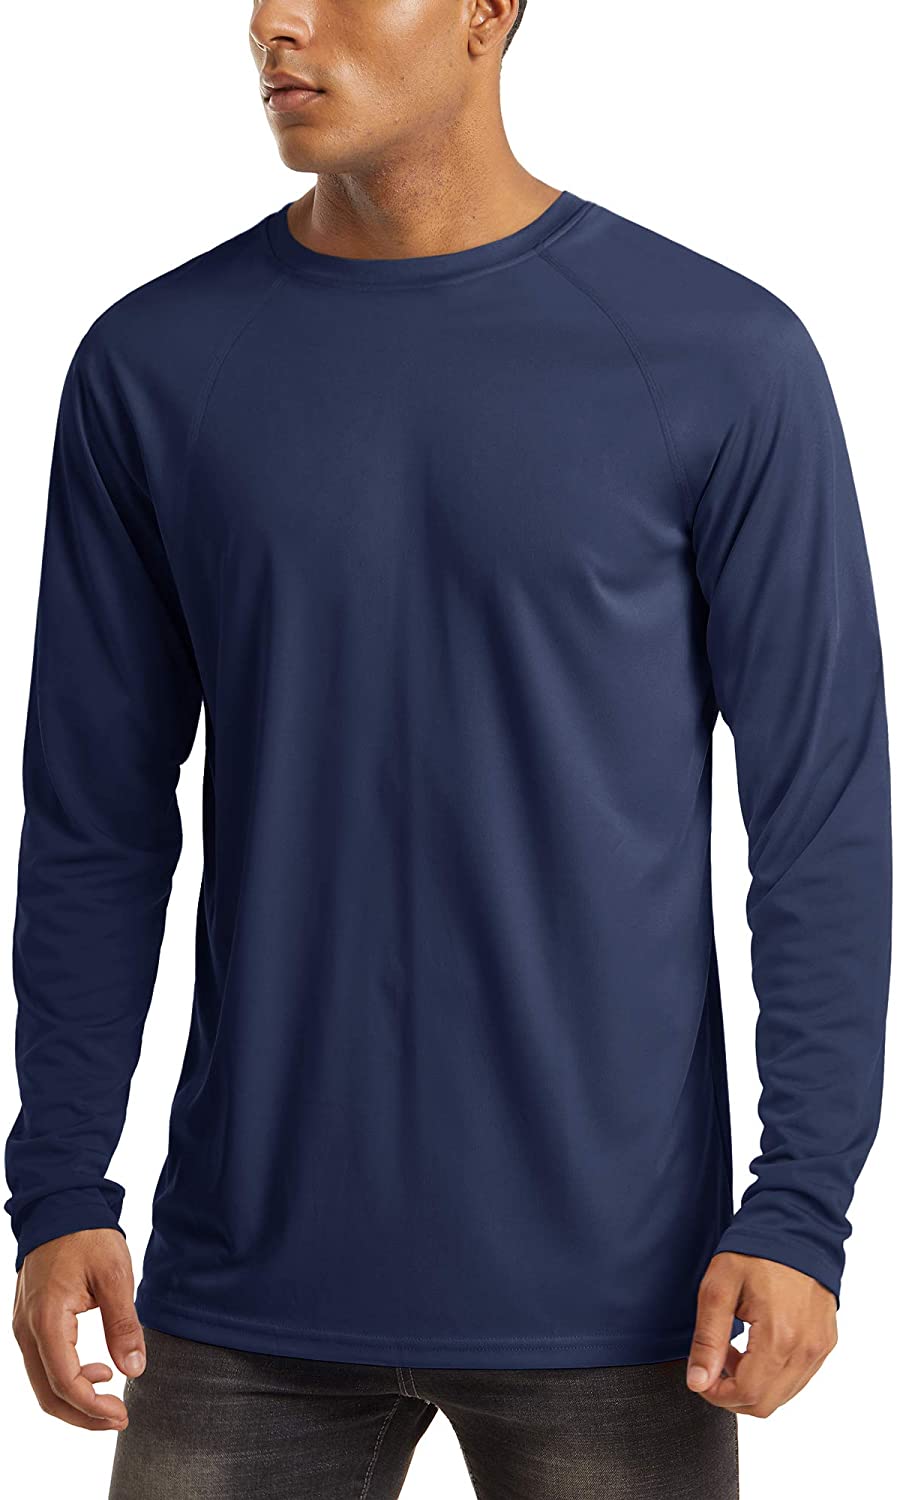 Men's UPF 50+ UV Long Sleeve Athletic Shirts - Cycorld Navy / 2XL